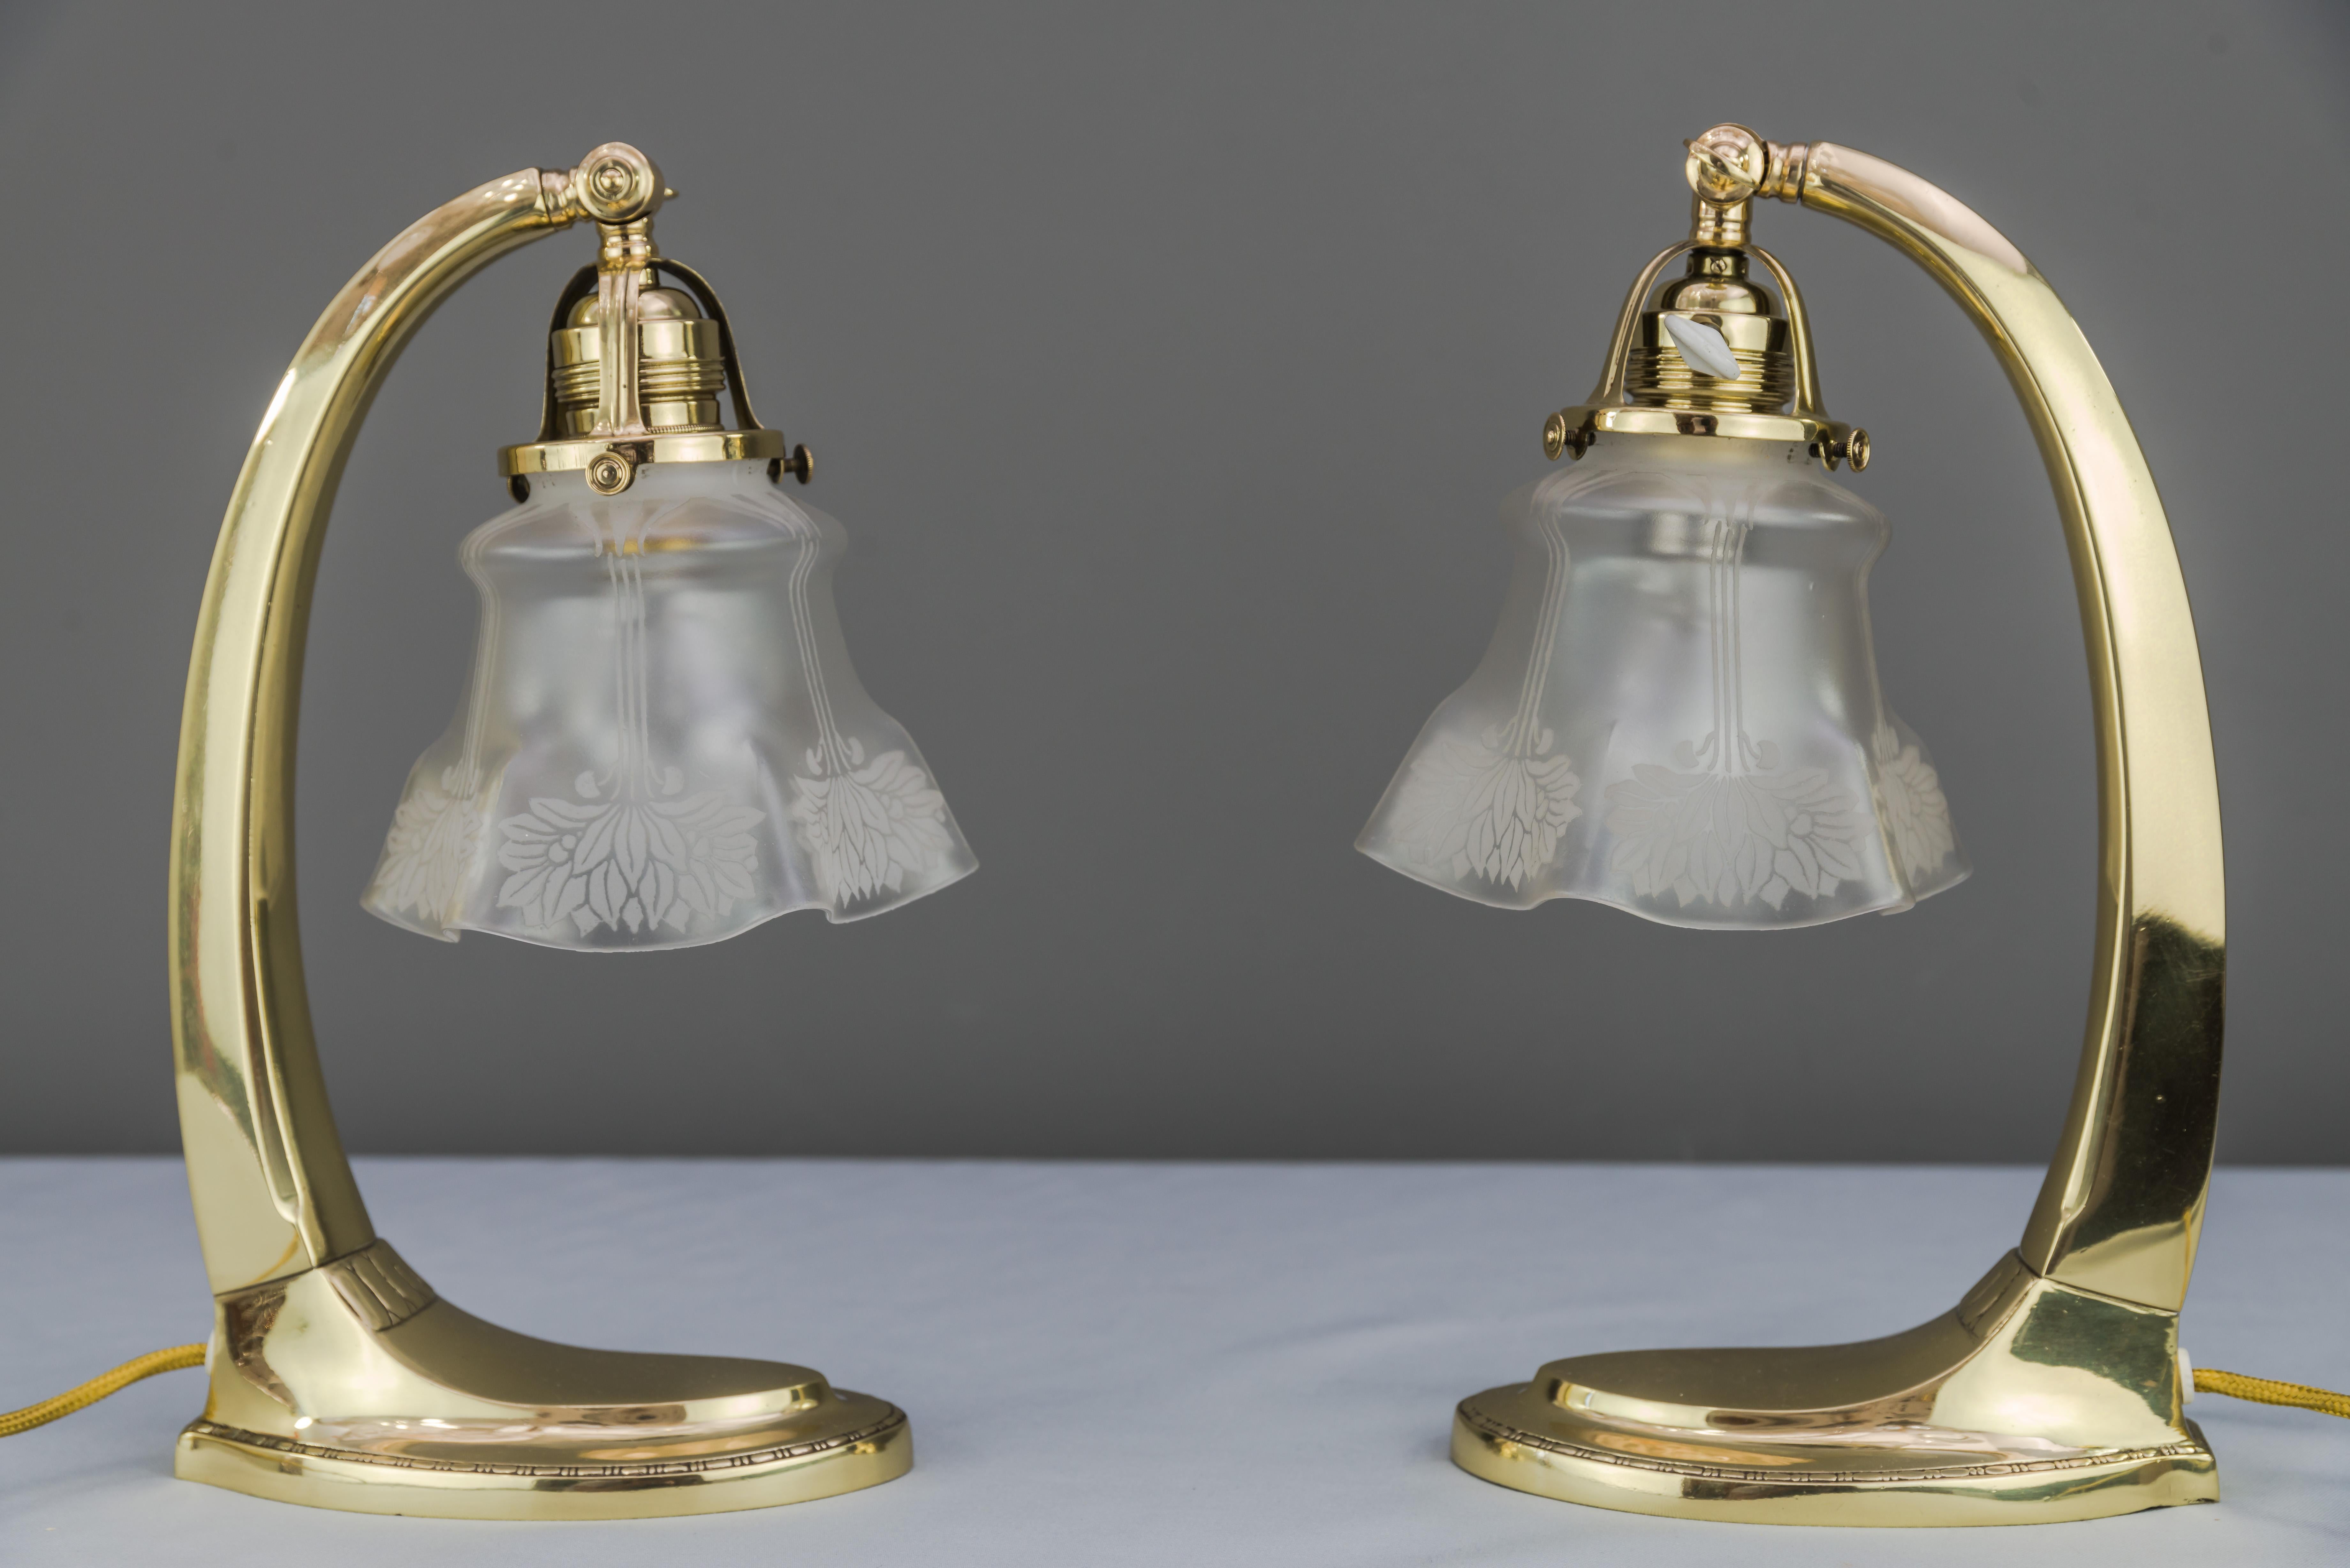 Two Jugendstil Table Lamps 1907 with Original Glas Shades For Sale 4